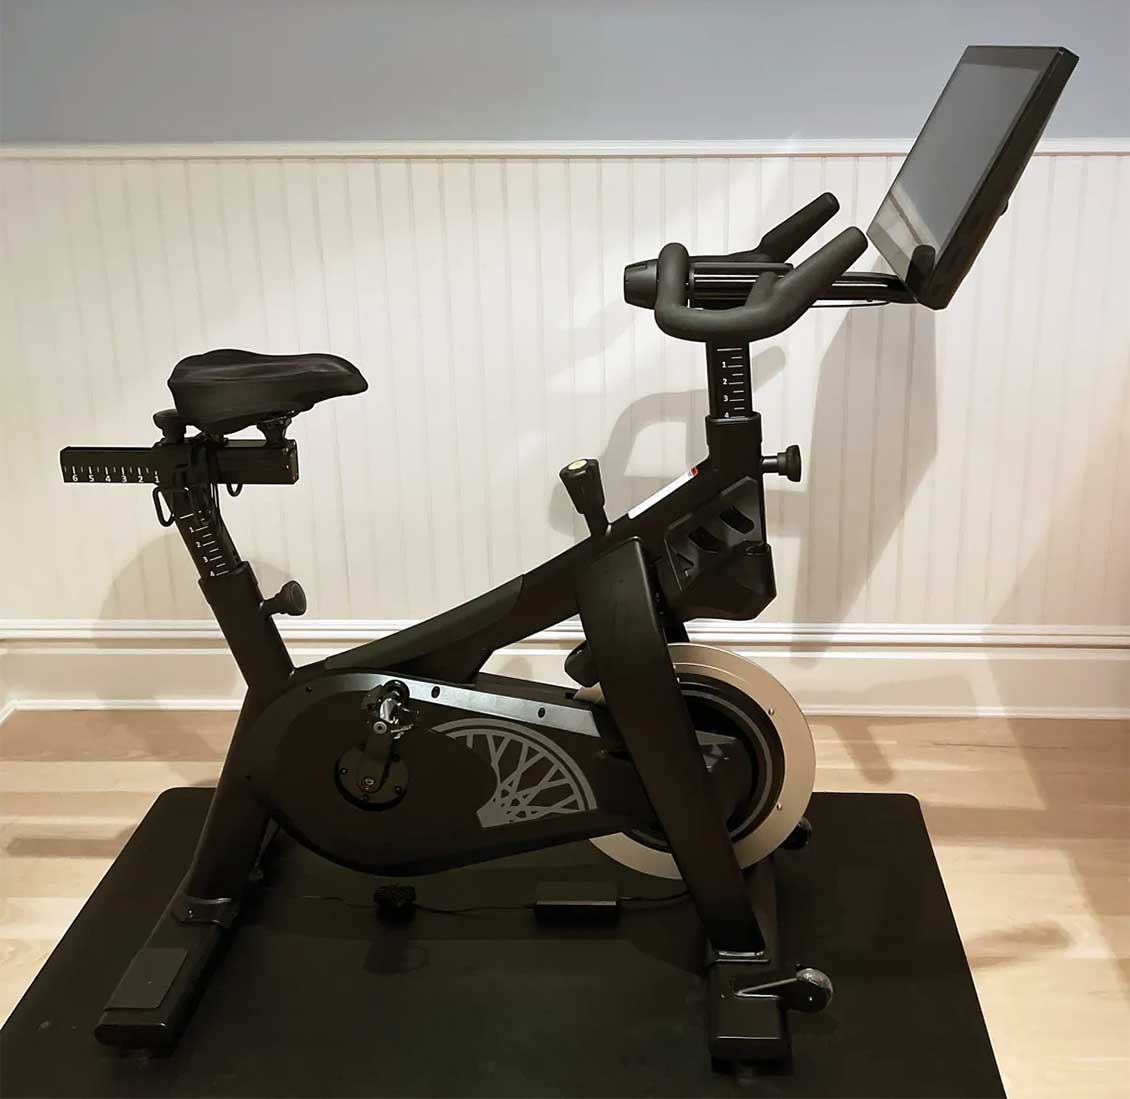 Brooke Shields' Soul Cycle, an exercise bike.